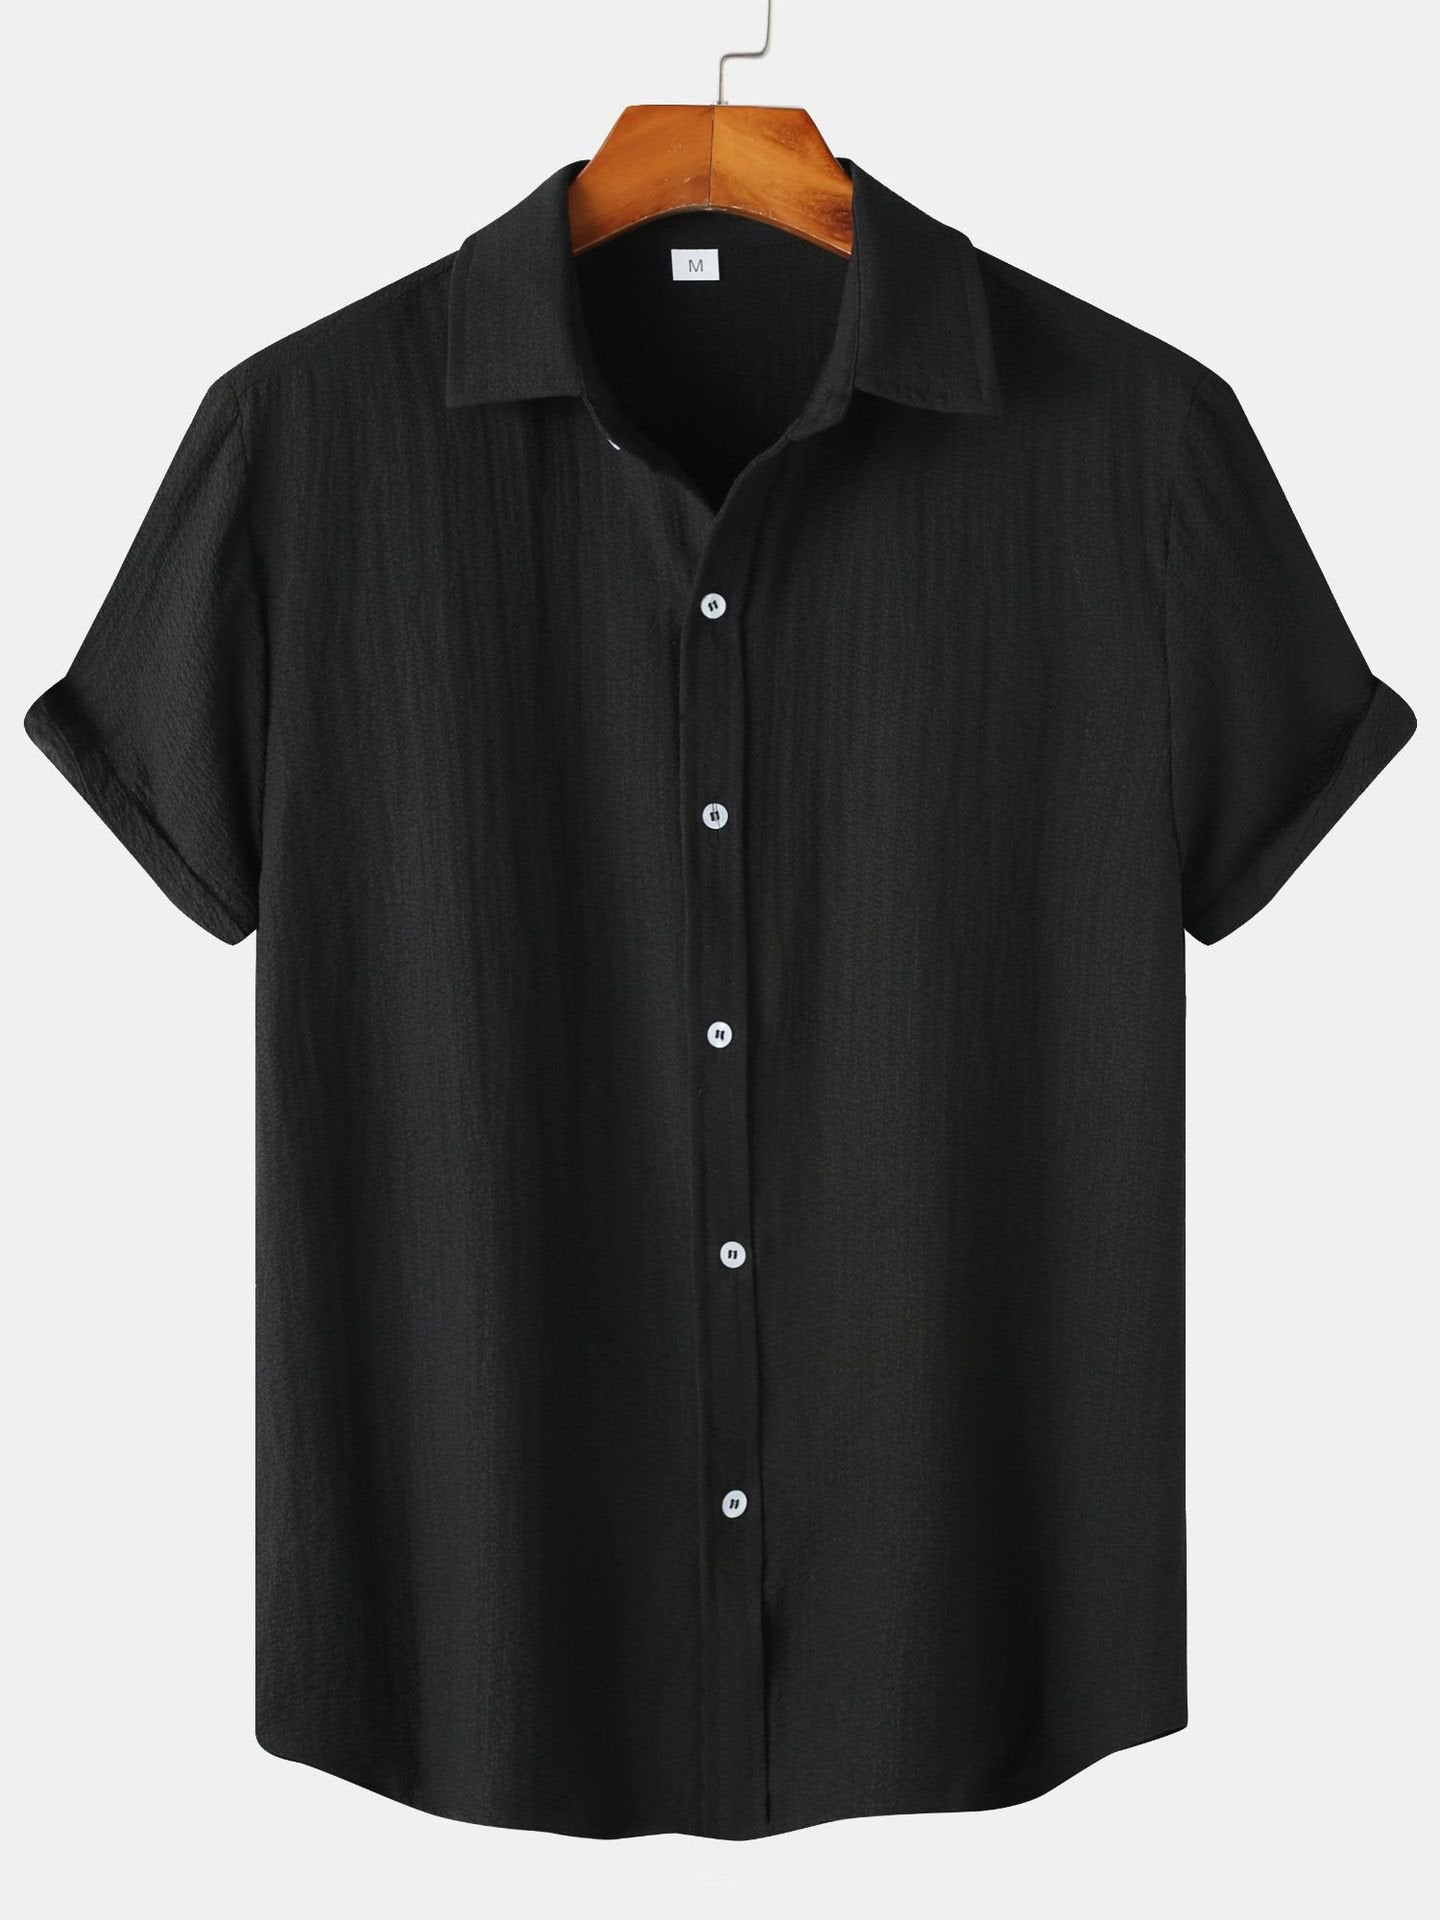 Men's Anti-Wrinkle Short Sleeve Solid Color Shirt Top